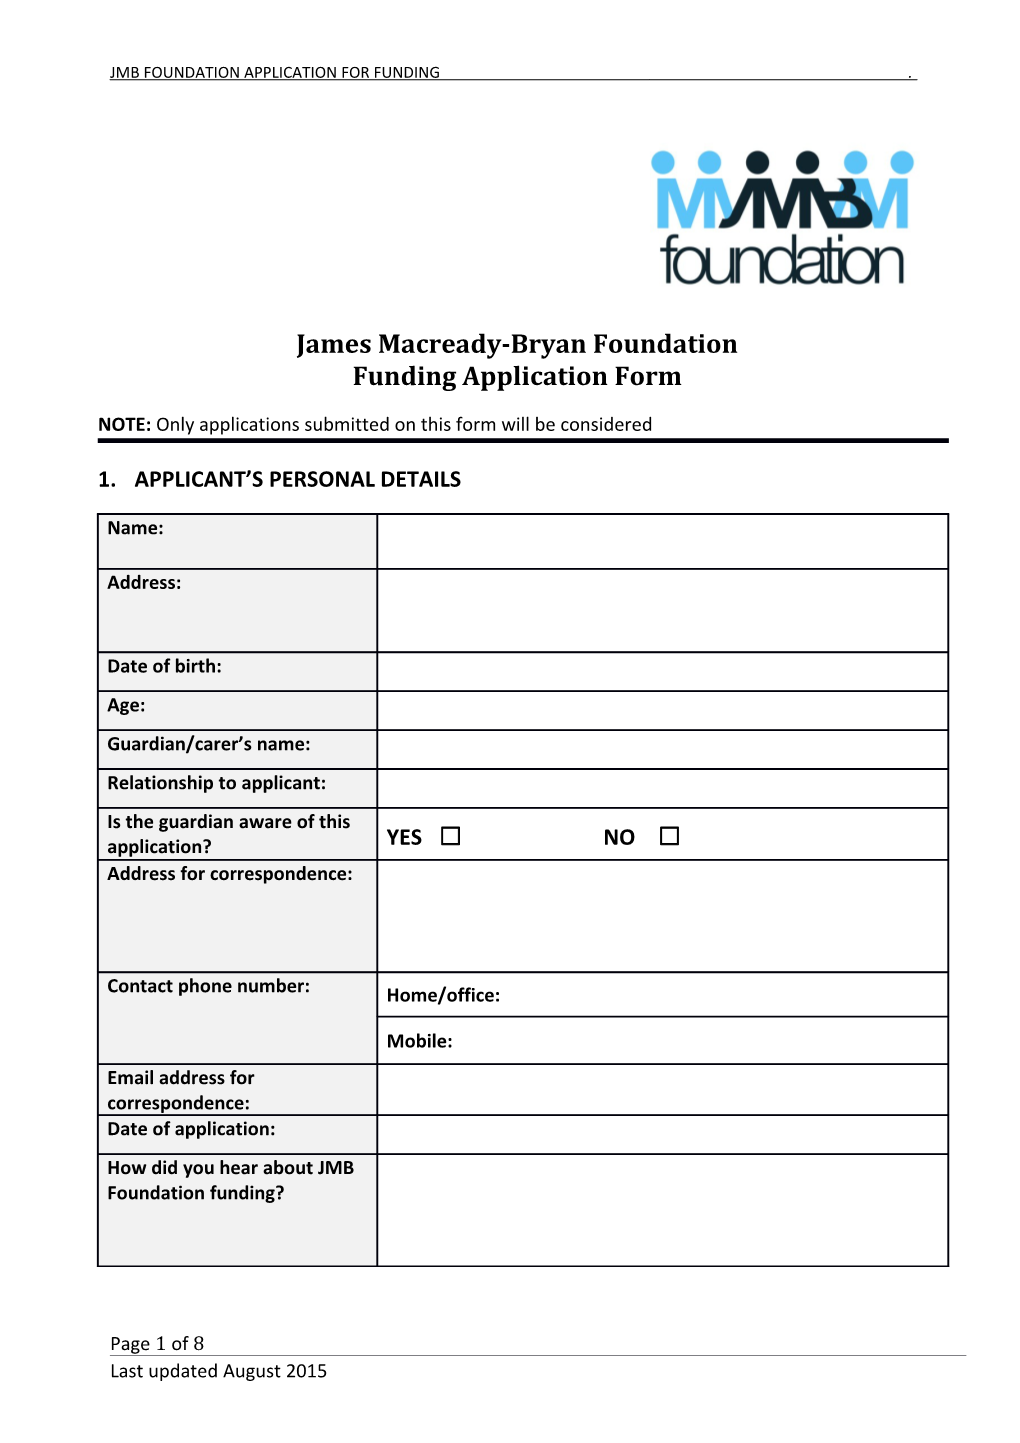 Jmb Foundation Application for Funding